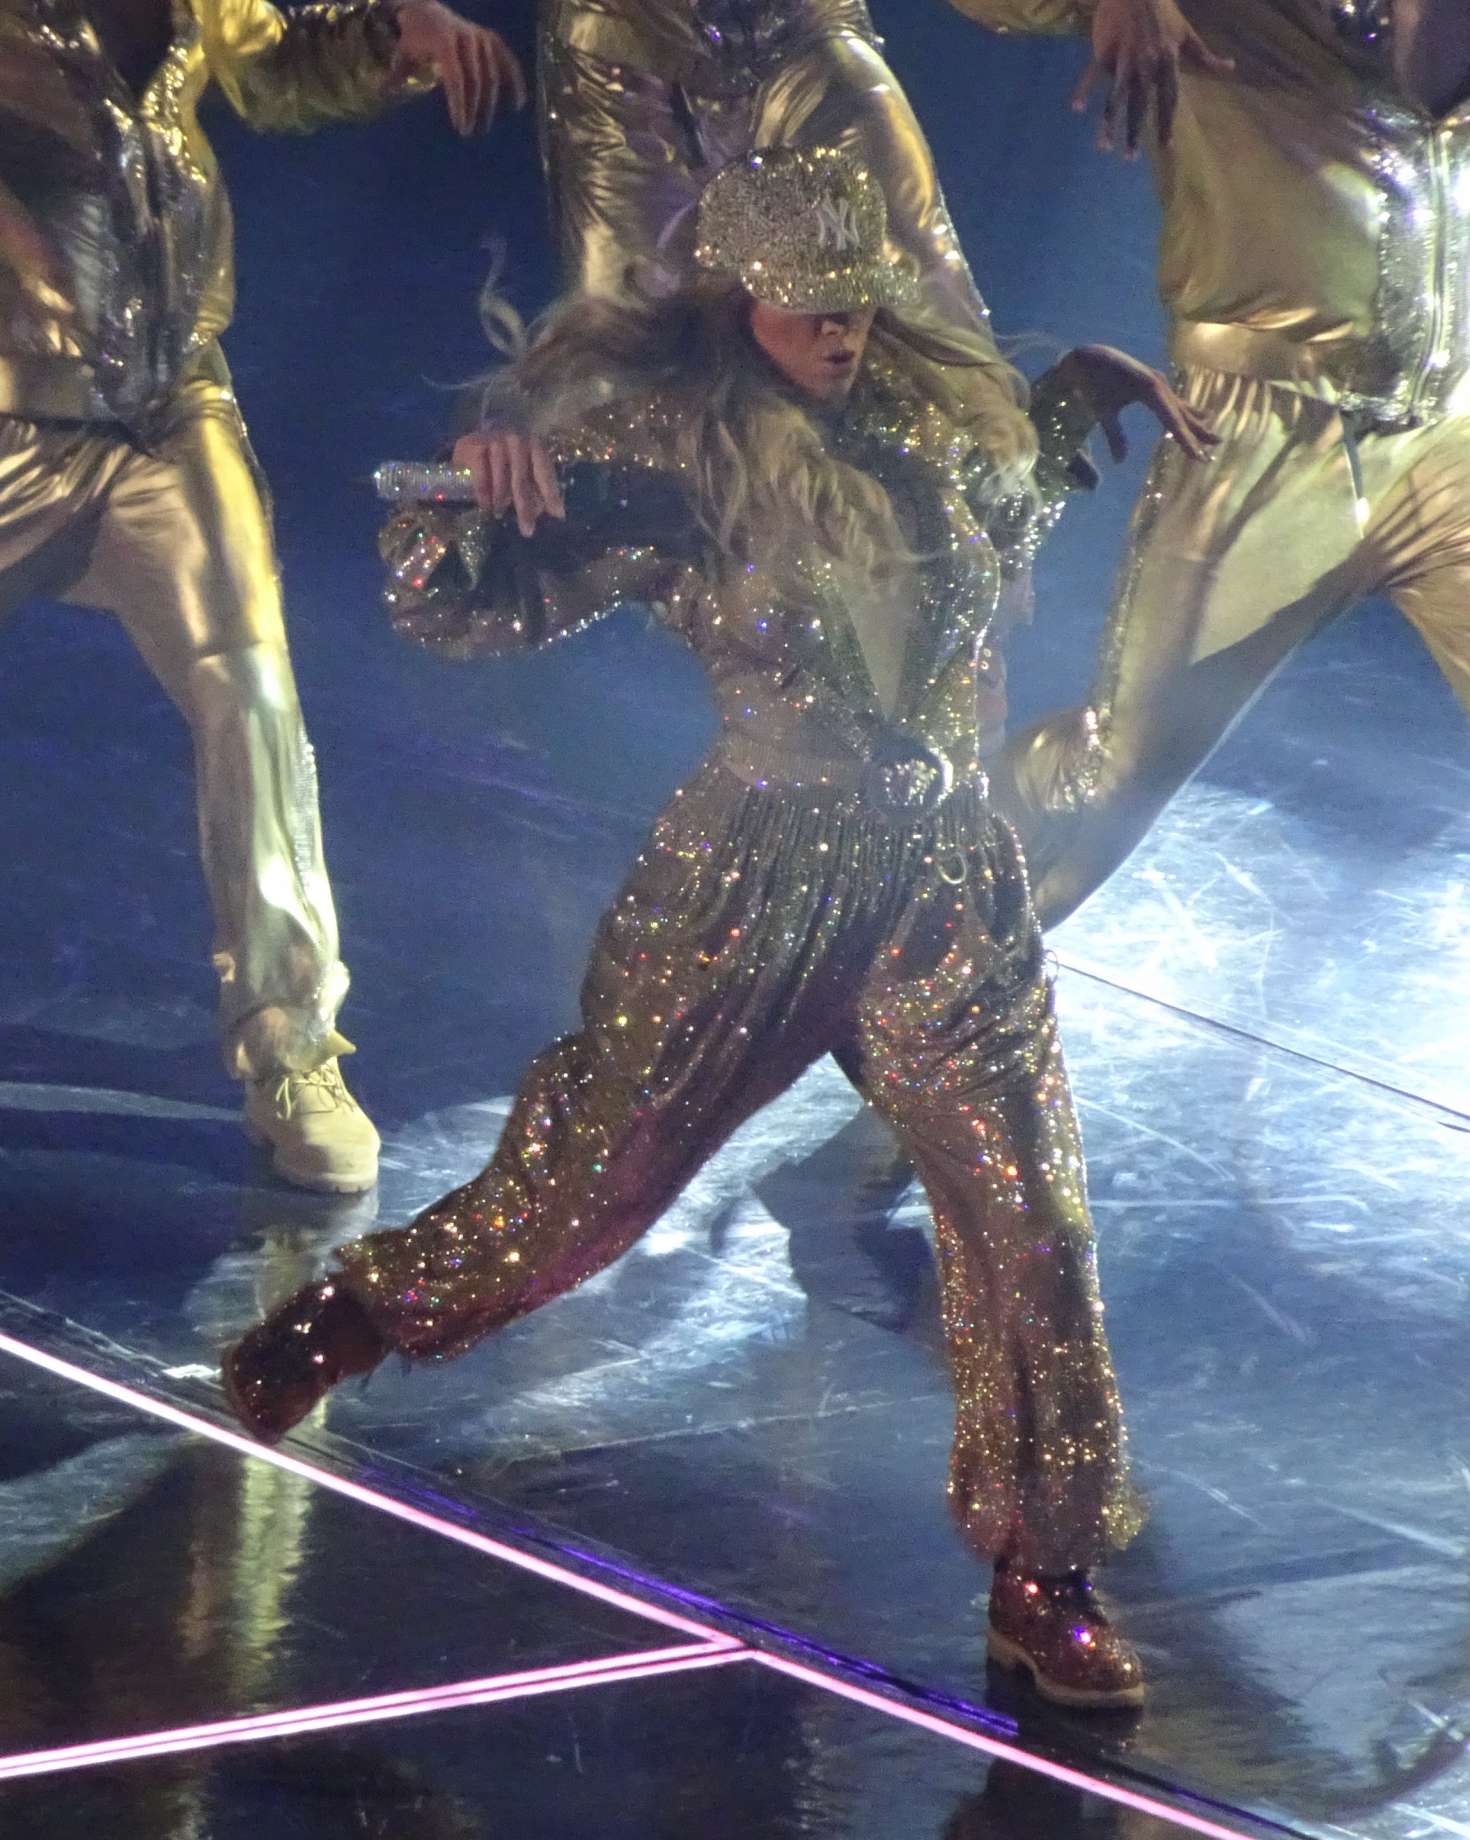 Jennifer Lopez â€“ Performs at her concert in Las Vegas